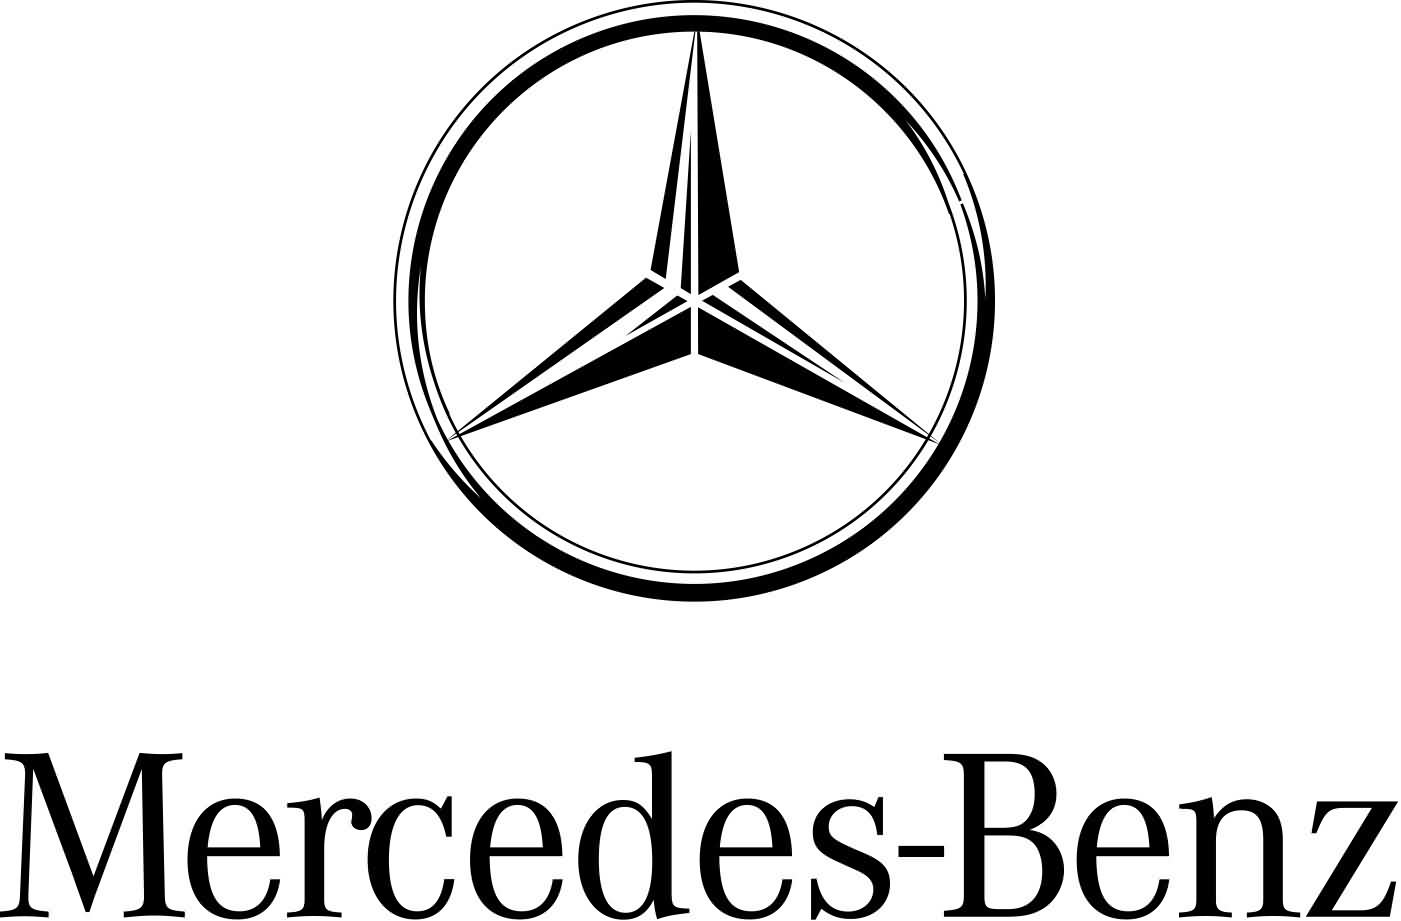 logo_mercedes-benz